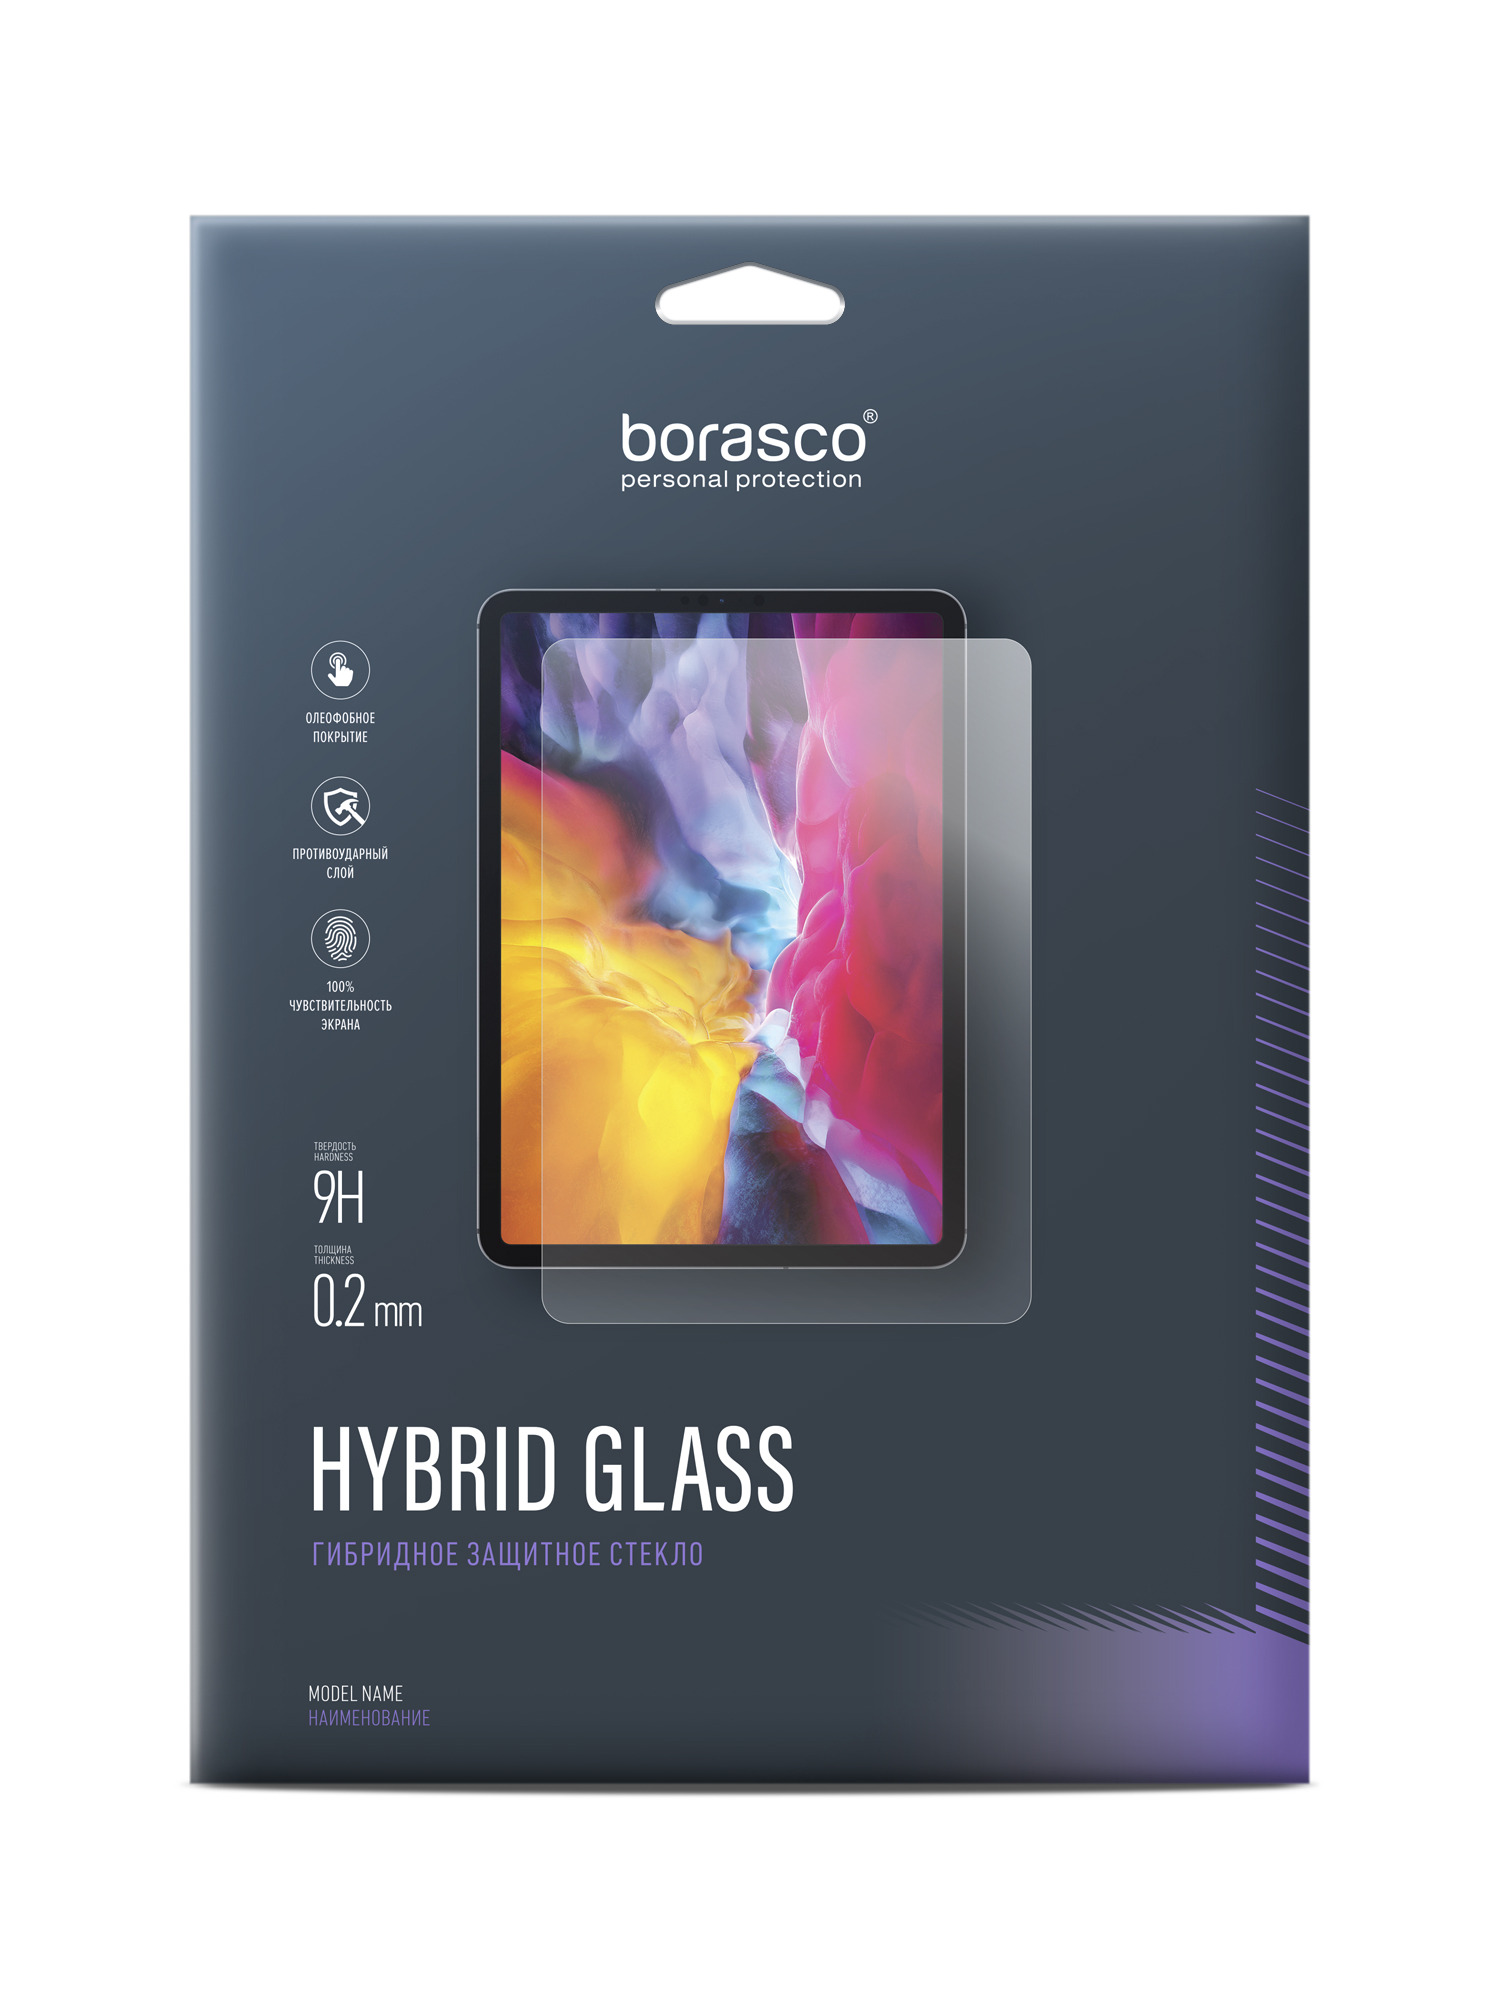 Защитное стекло Hybrid Glass для Samsung Galaxy Tab S7+ (SM-T970/ SM-T975) защитное стекло для samsung galaxy tab a 10 5 sm t590 sm t595